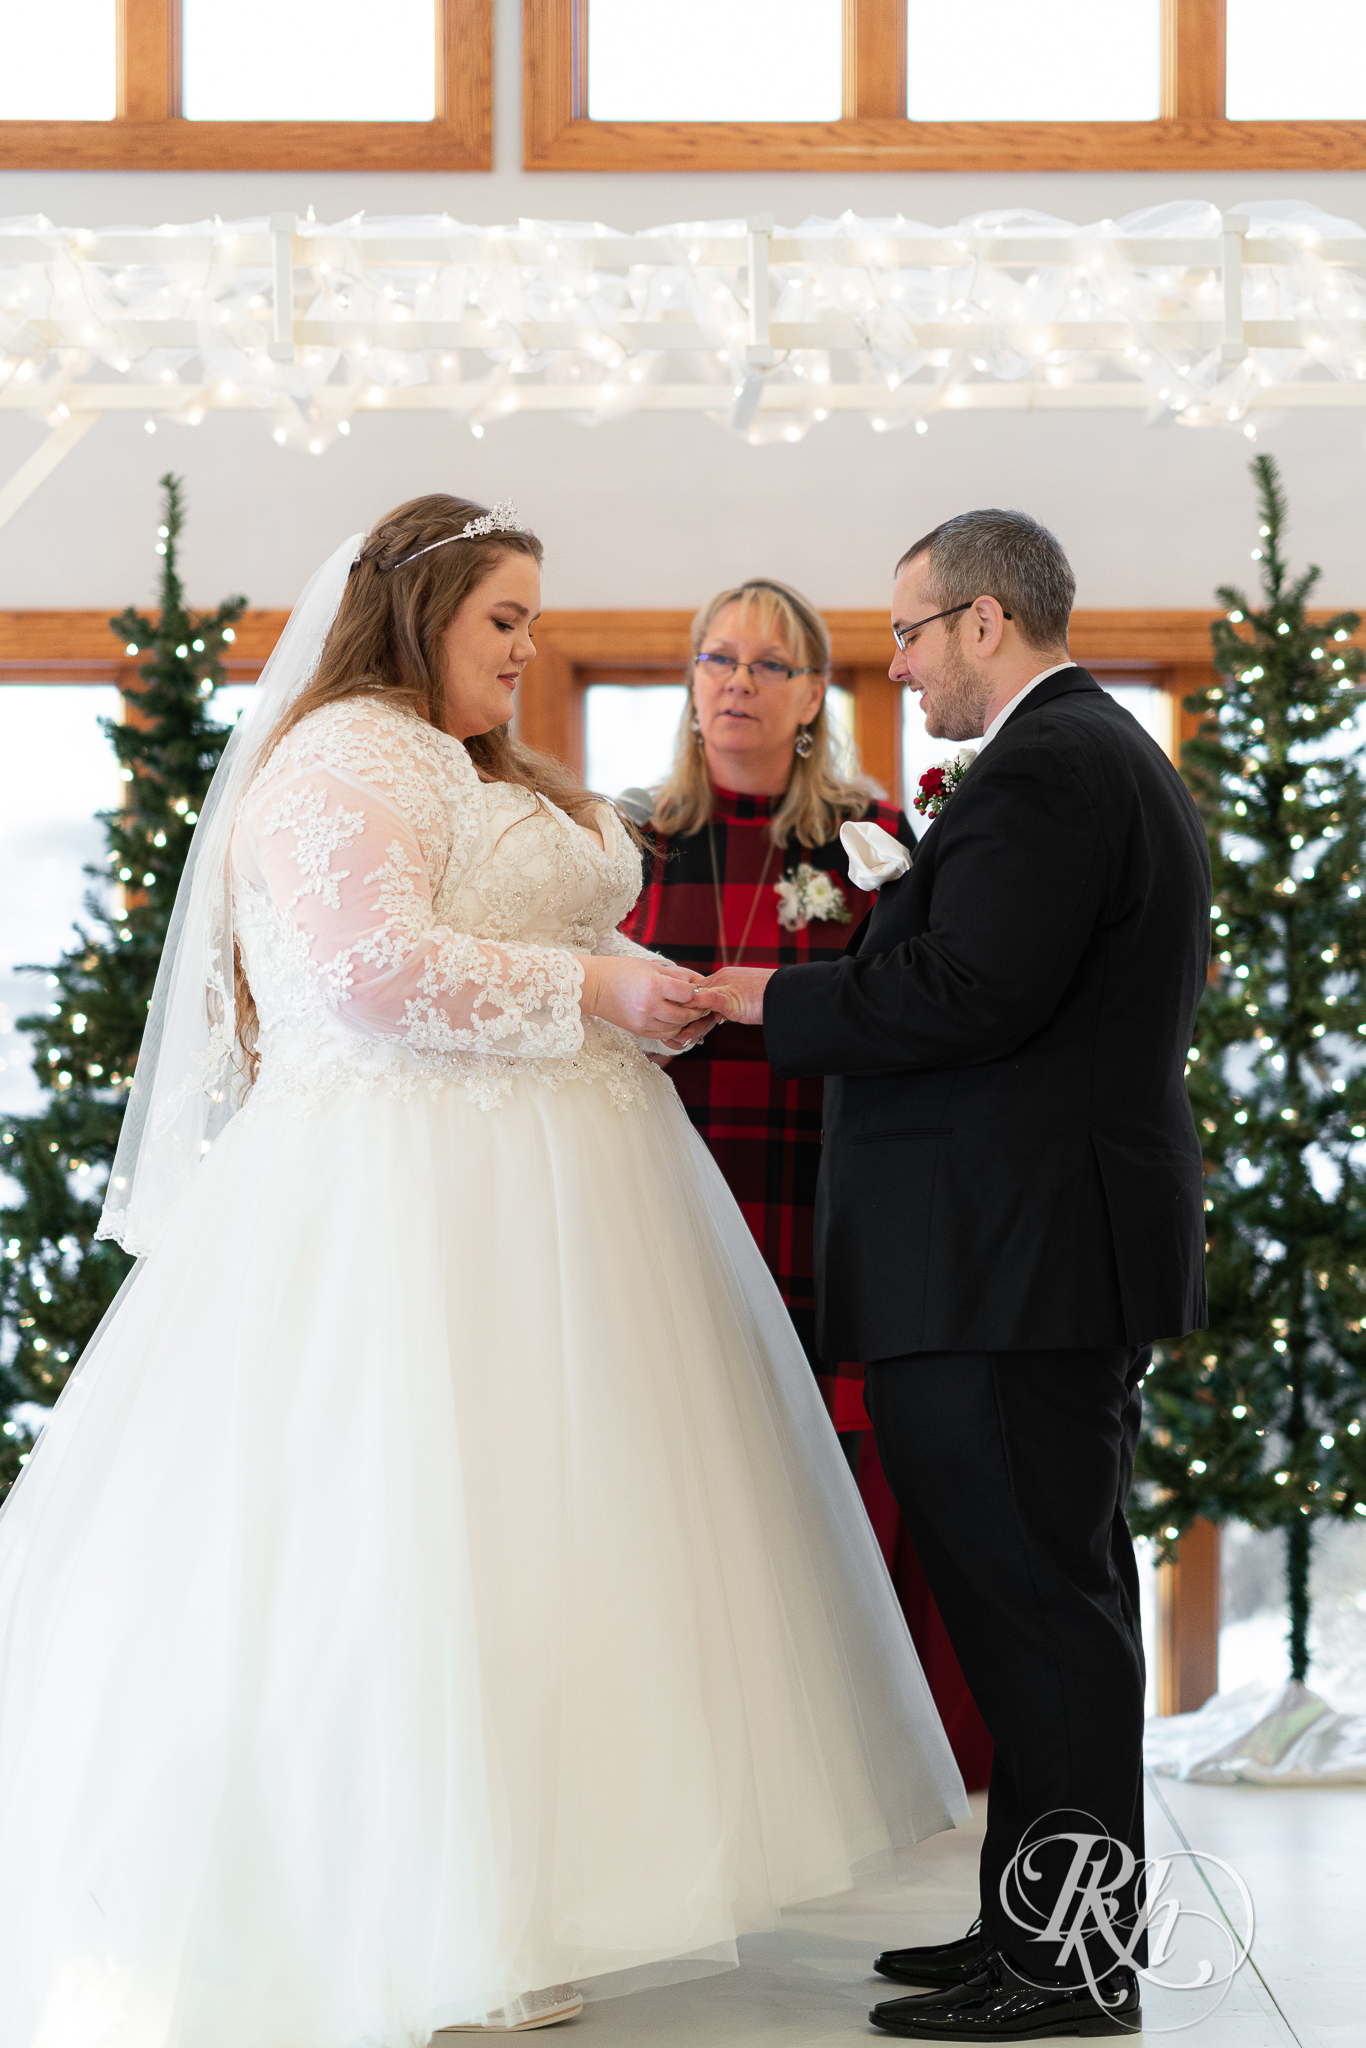 Wedding ceremony at Christmas wedding at Oak Glen Golf Course in Stillwater, Minnesota.